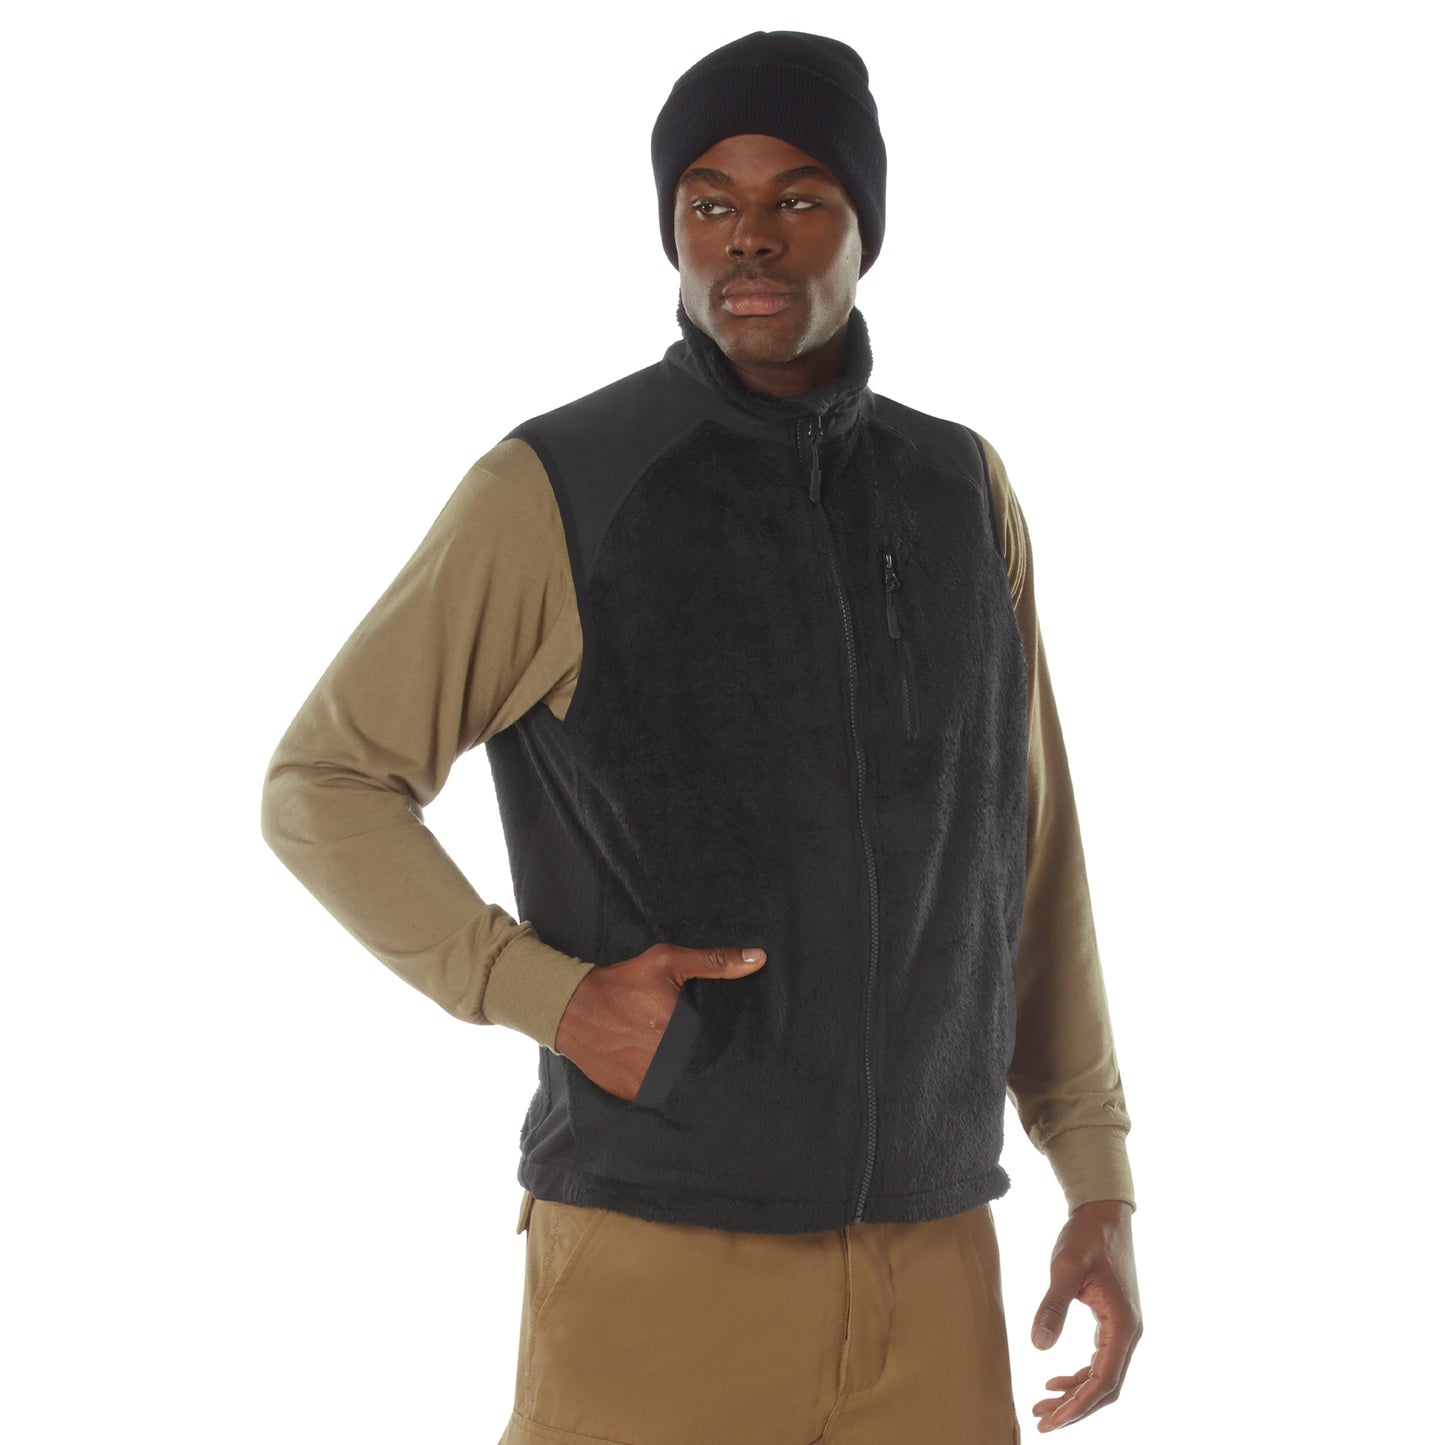 Rothco Men's Mid-Weight Fleece Vest E.C.W.C.S. Fleece Vest